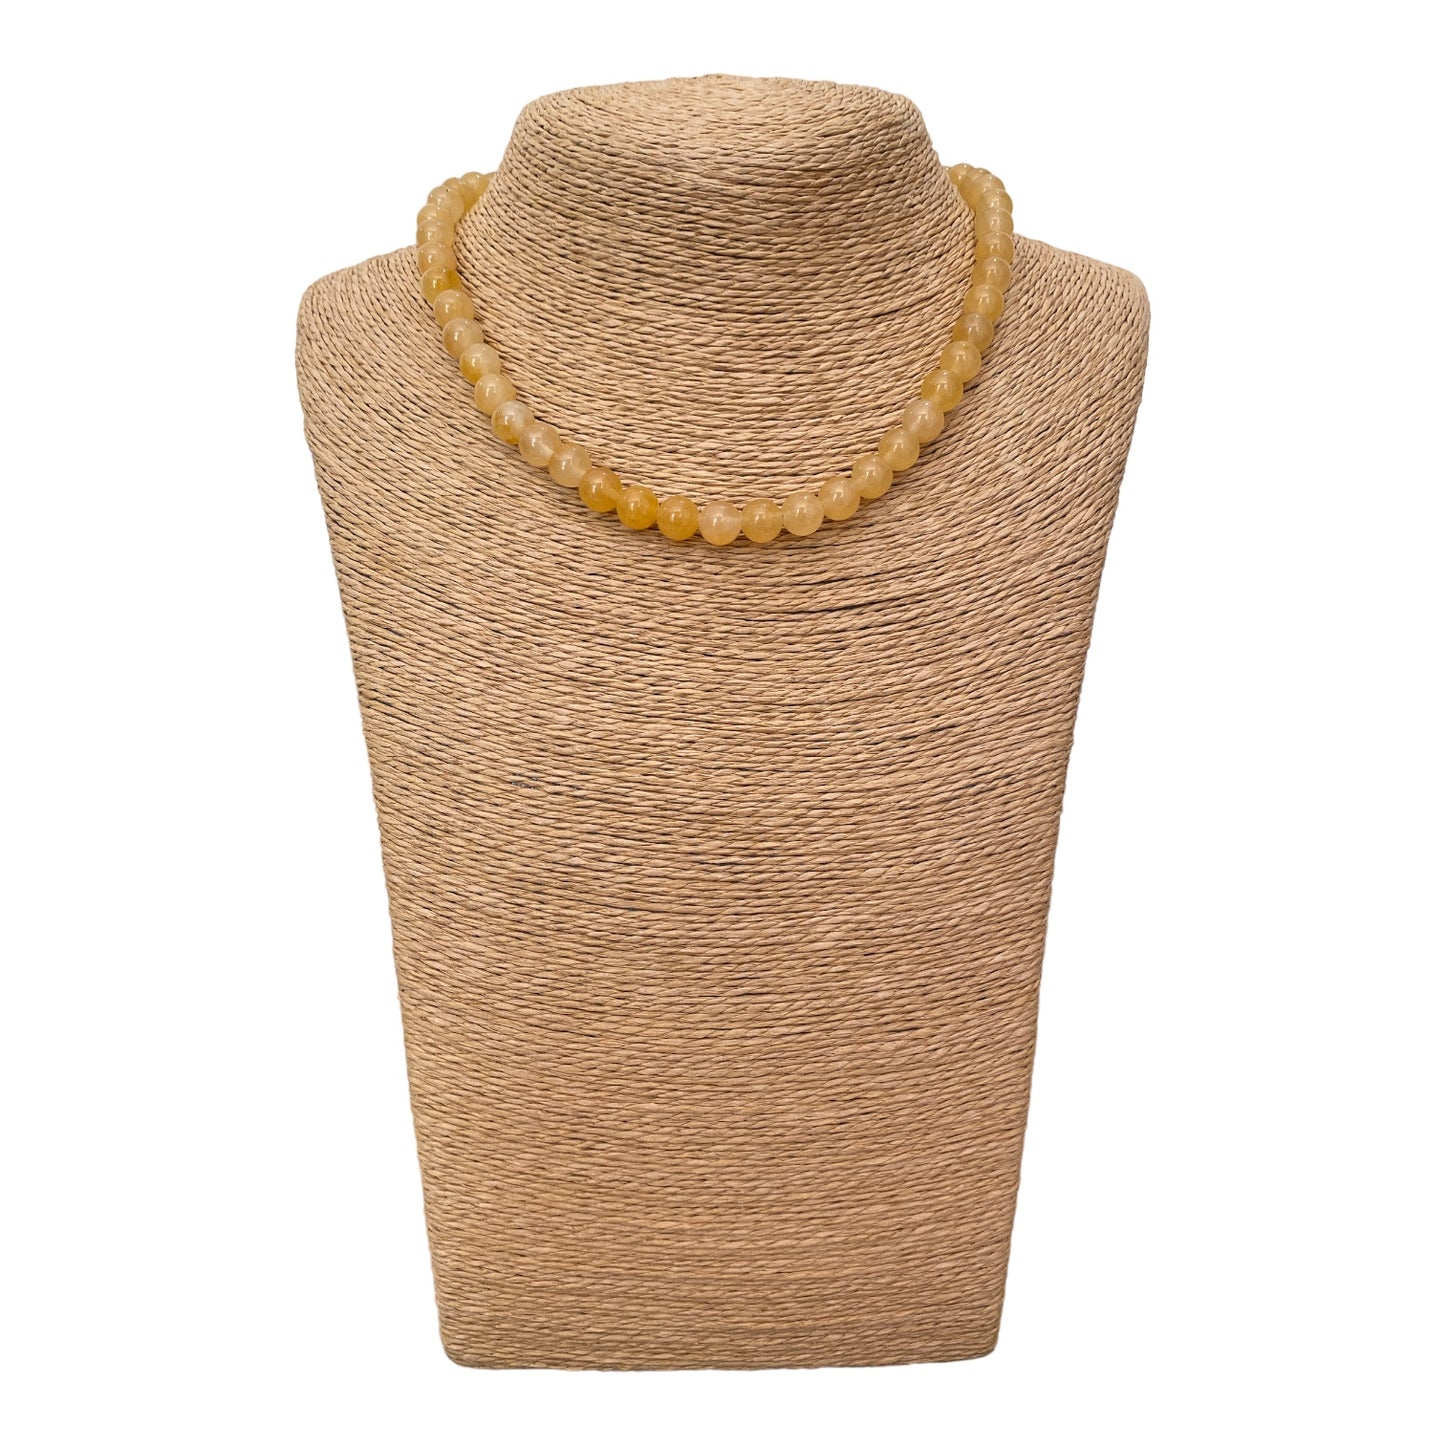 Yellow Calcite Beaded Necklace- 42cm